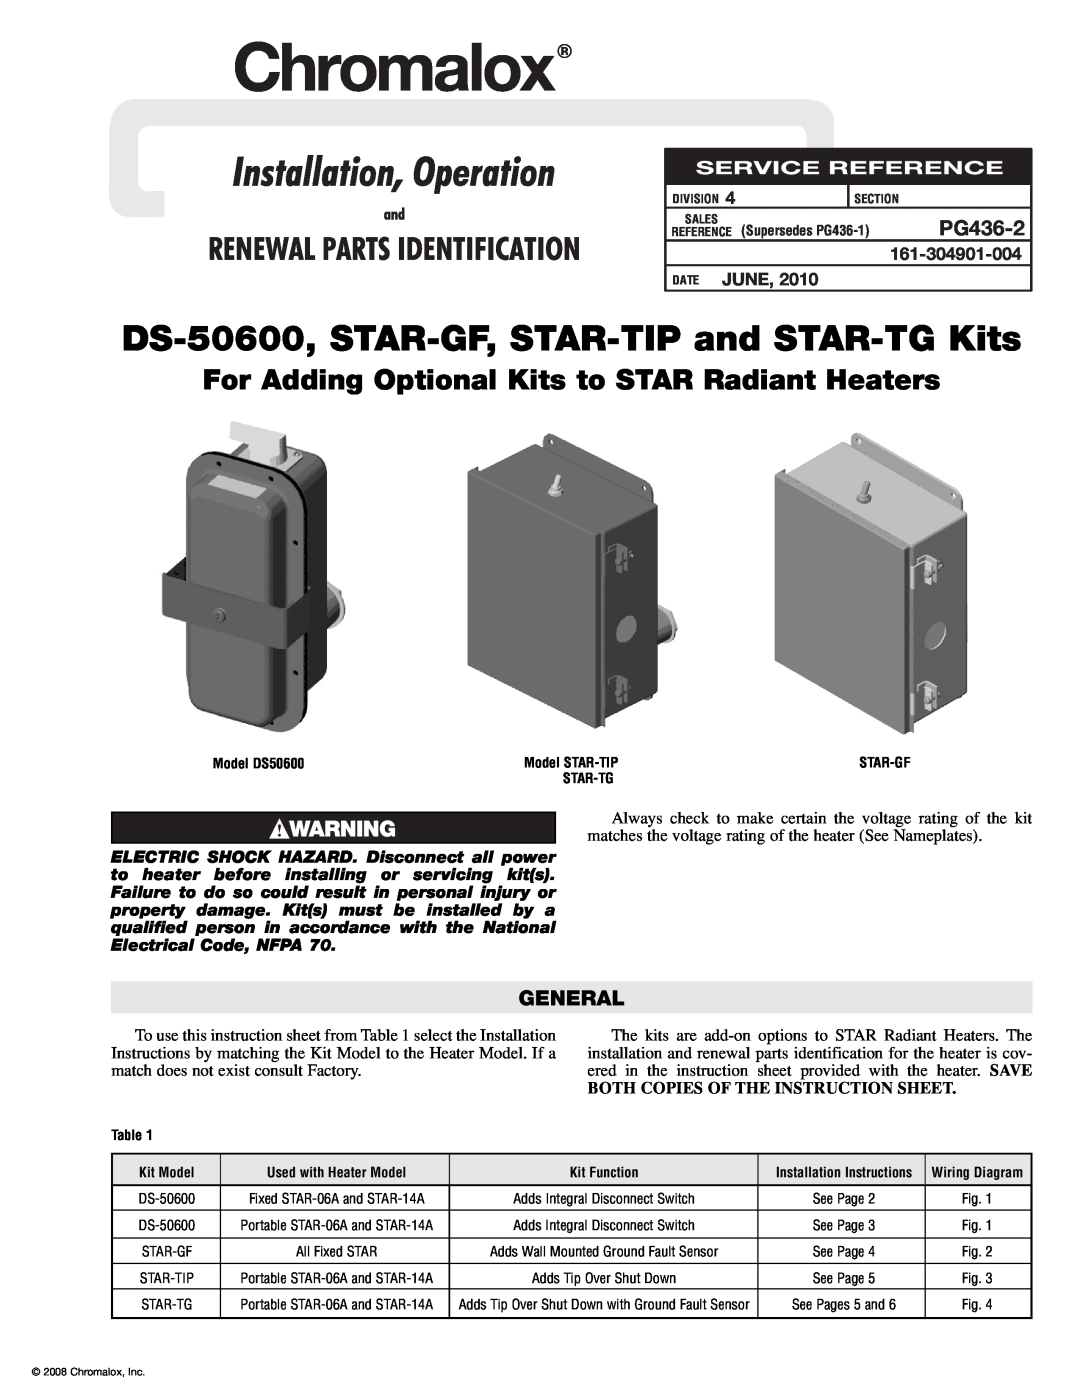 Chromalox DS-50600 installation instructions PG436-2, General, 161-304901-004, Date June, Chromalox 